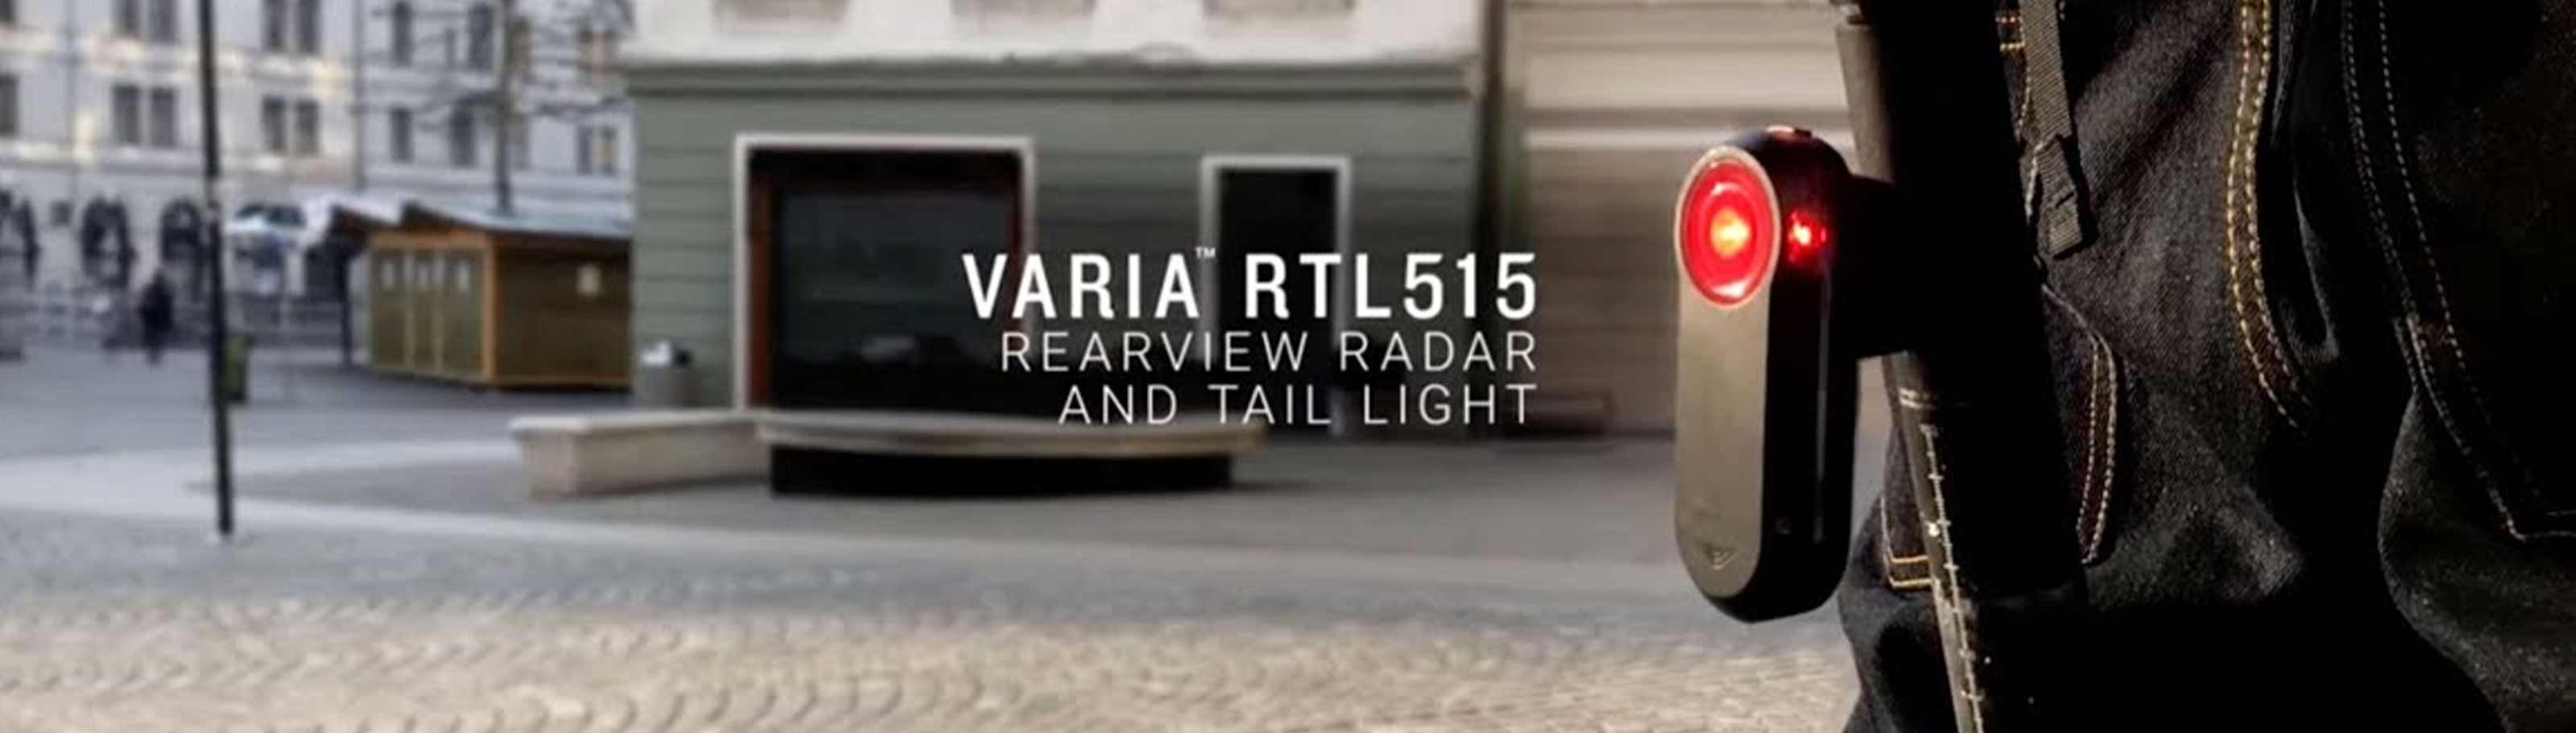 Garmin Garmin Varia RTL515 Rear View Radar with Taillight